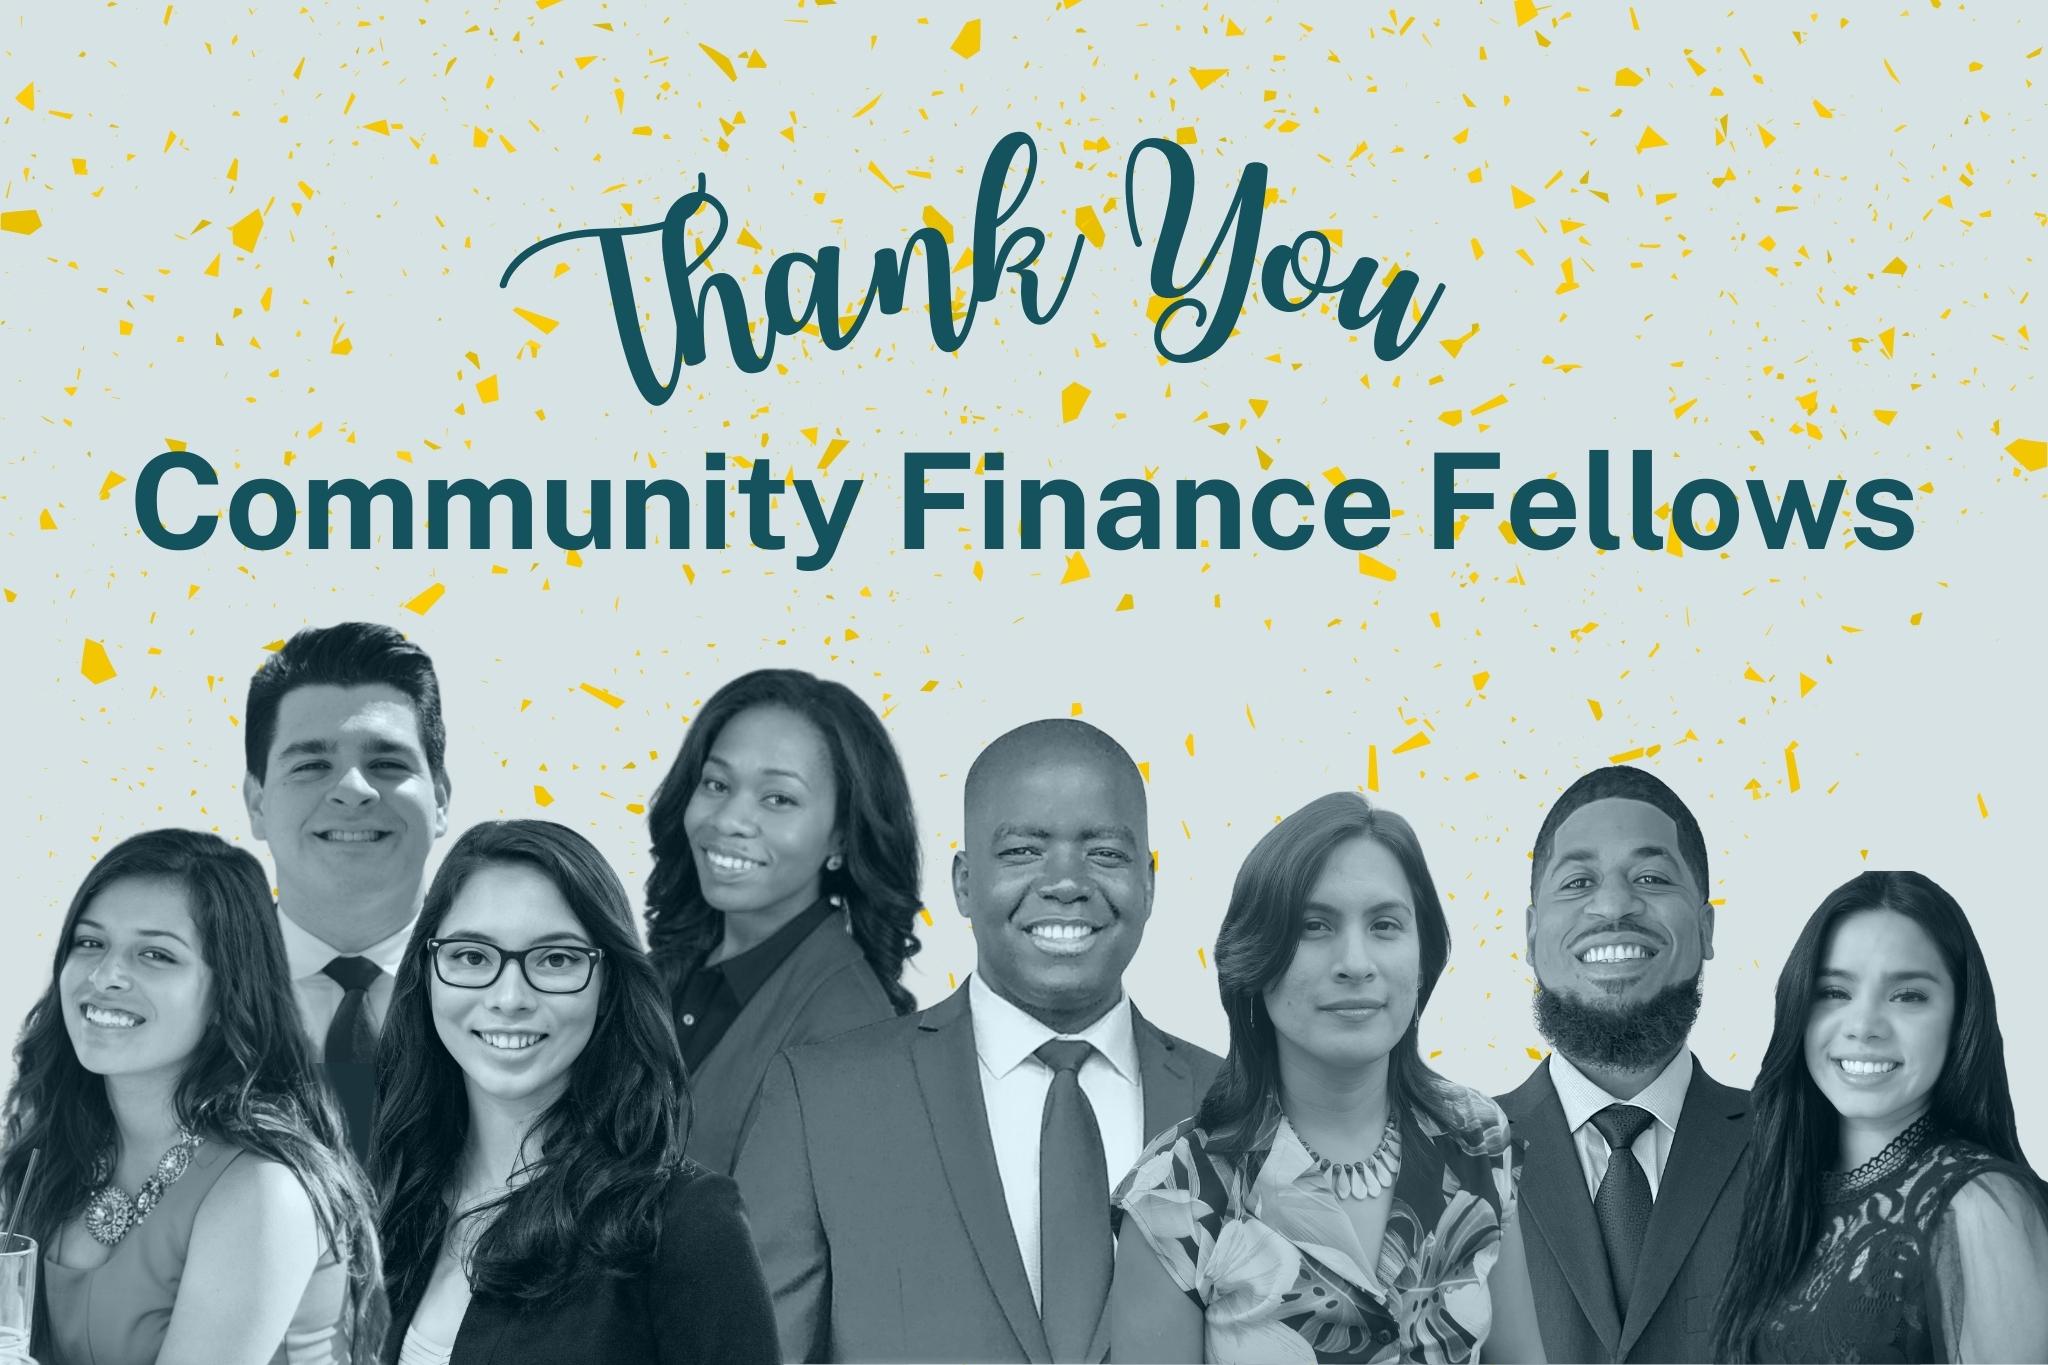 Thank you, Community Finance Fellows